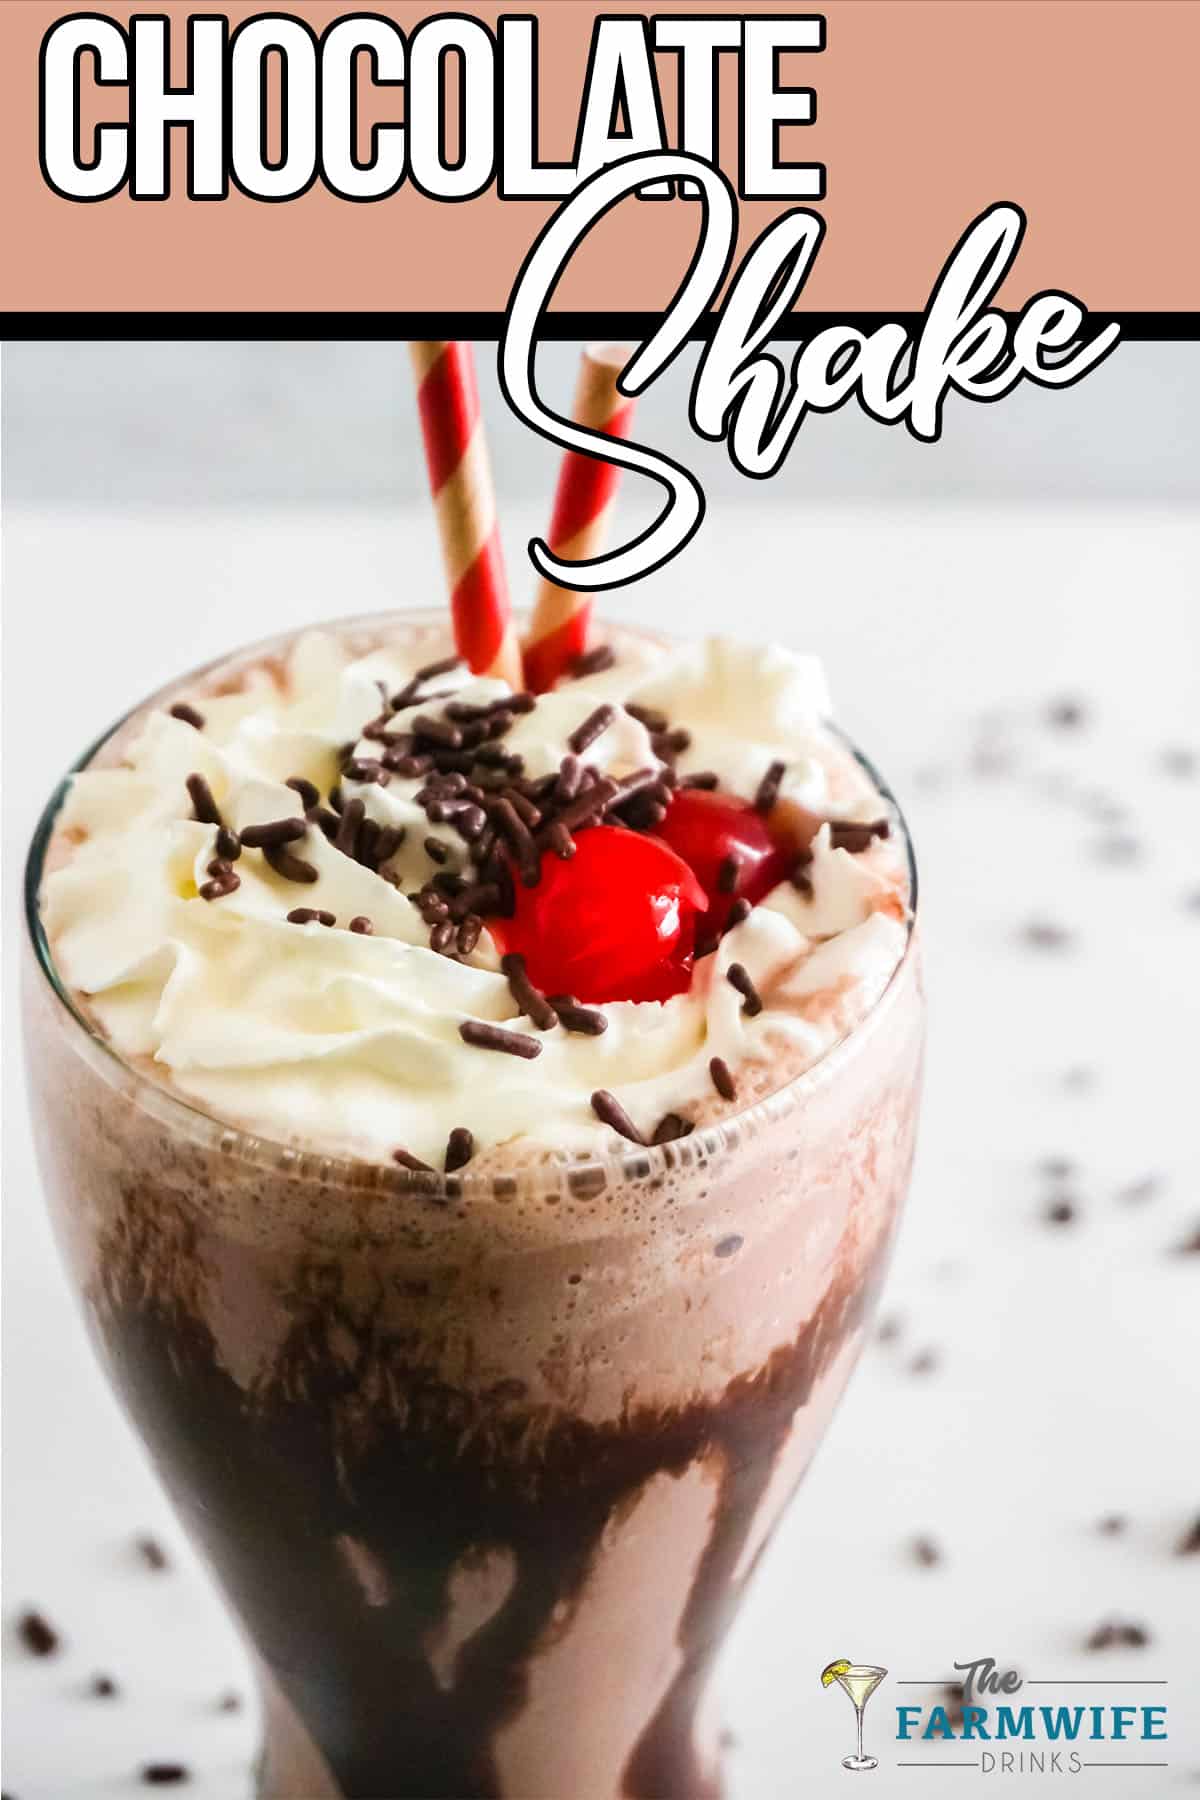 Top angle of Chocolate Milkshake, with wording at top.